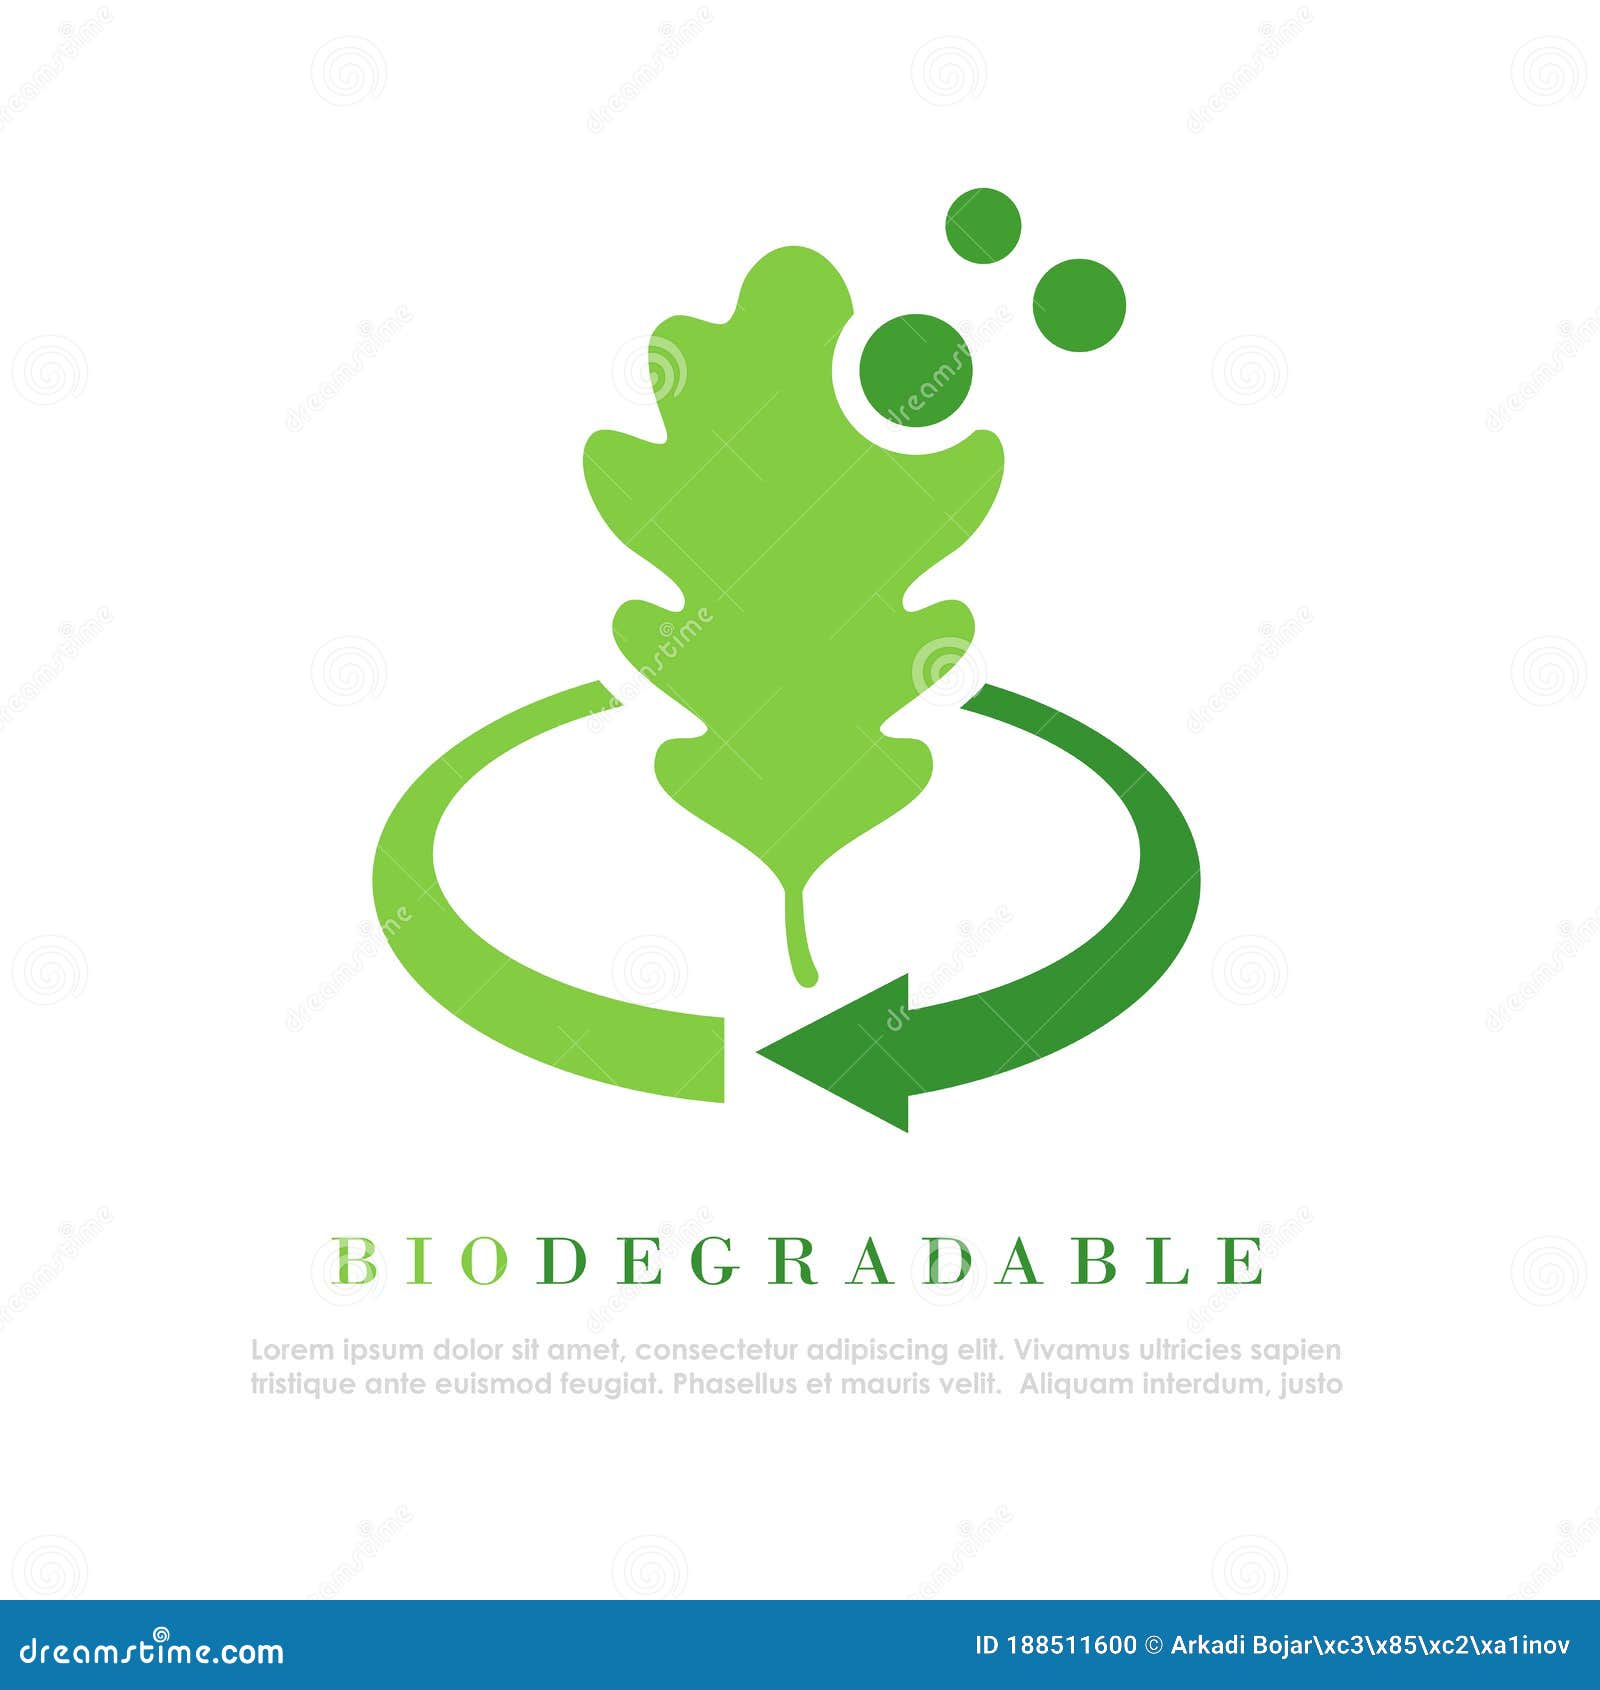 biodegradable  logo